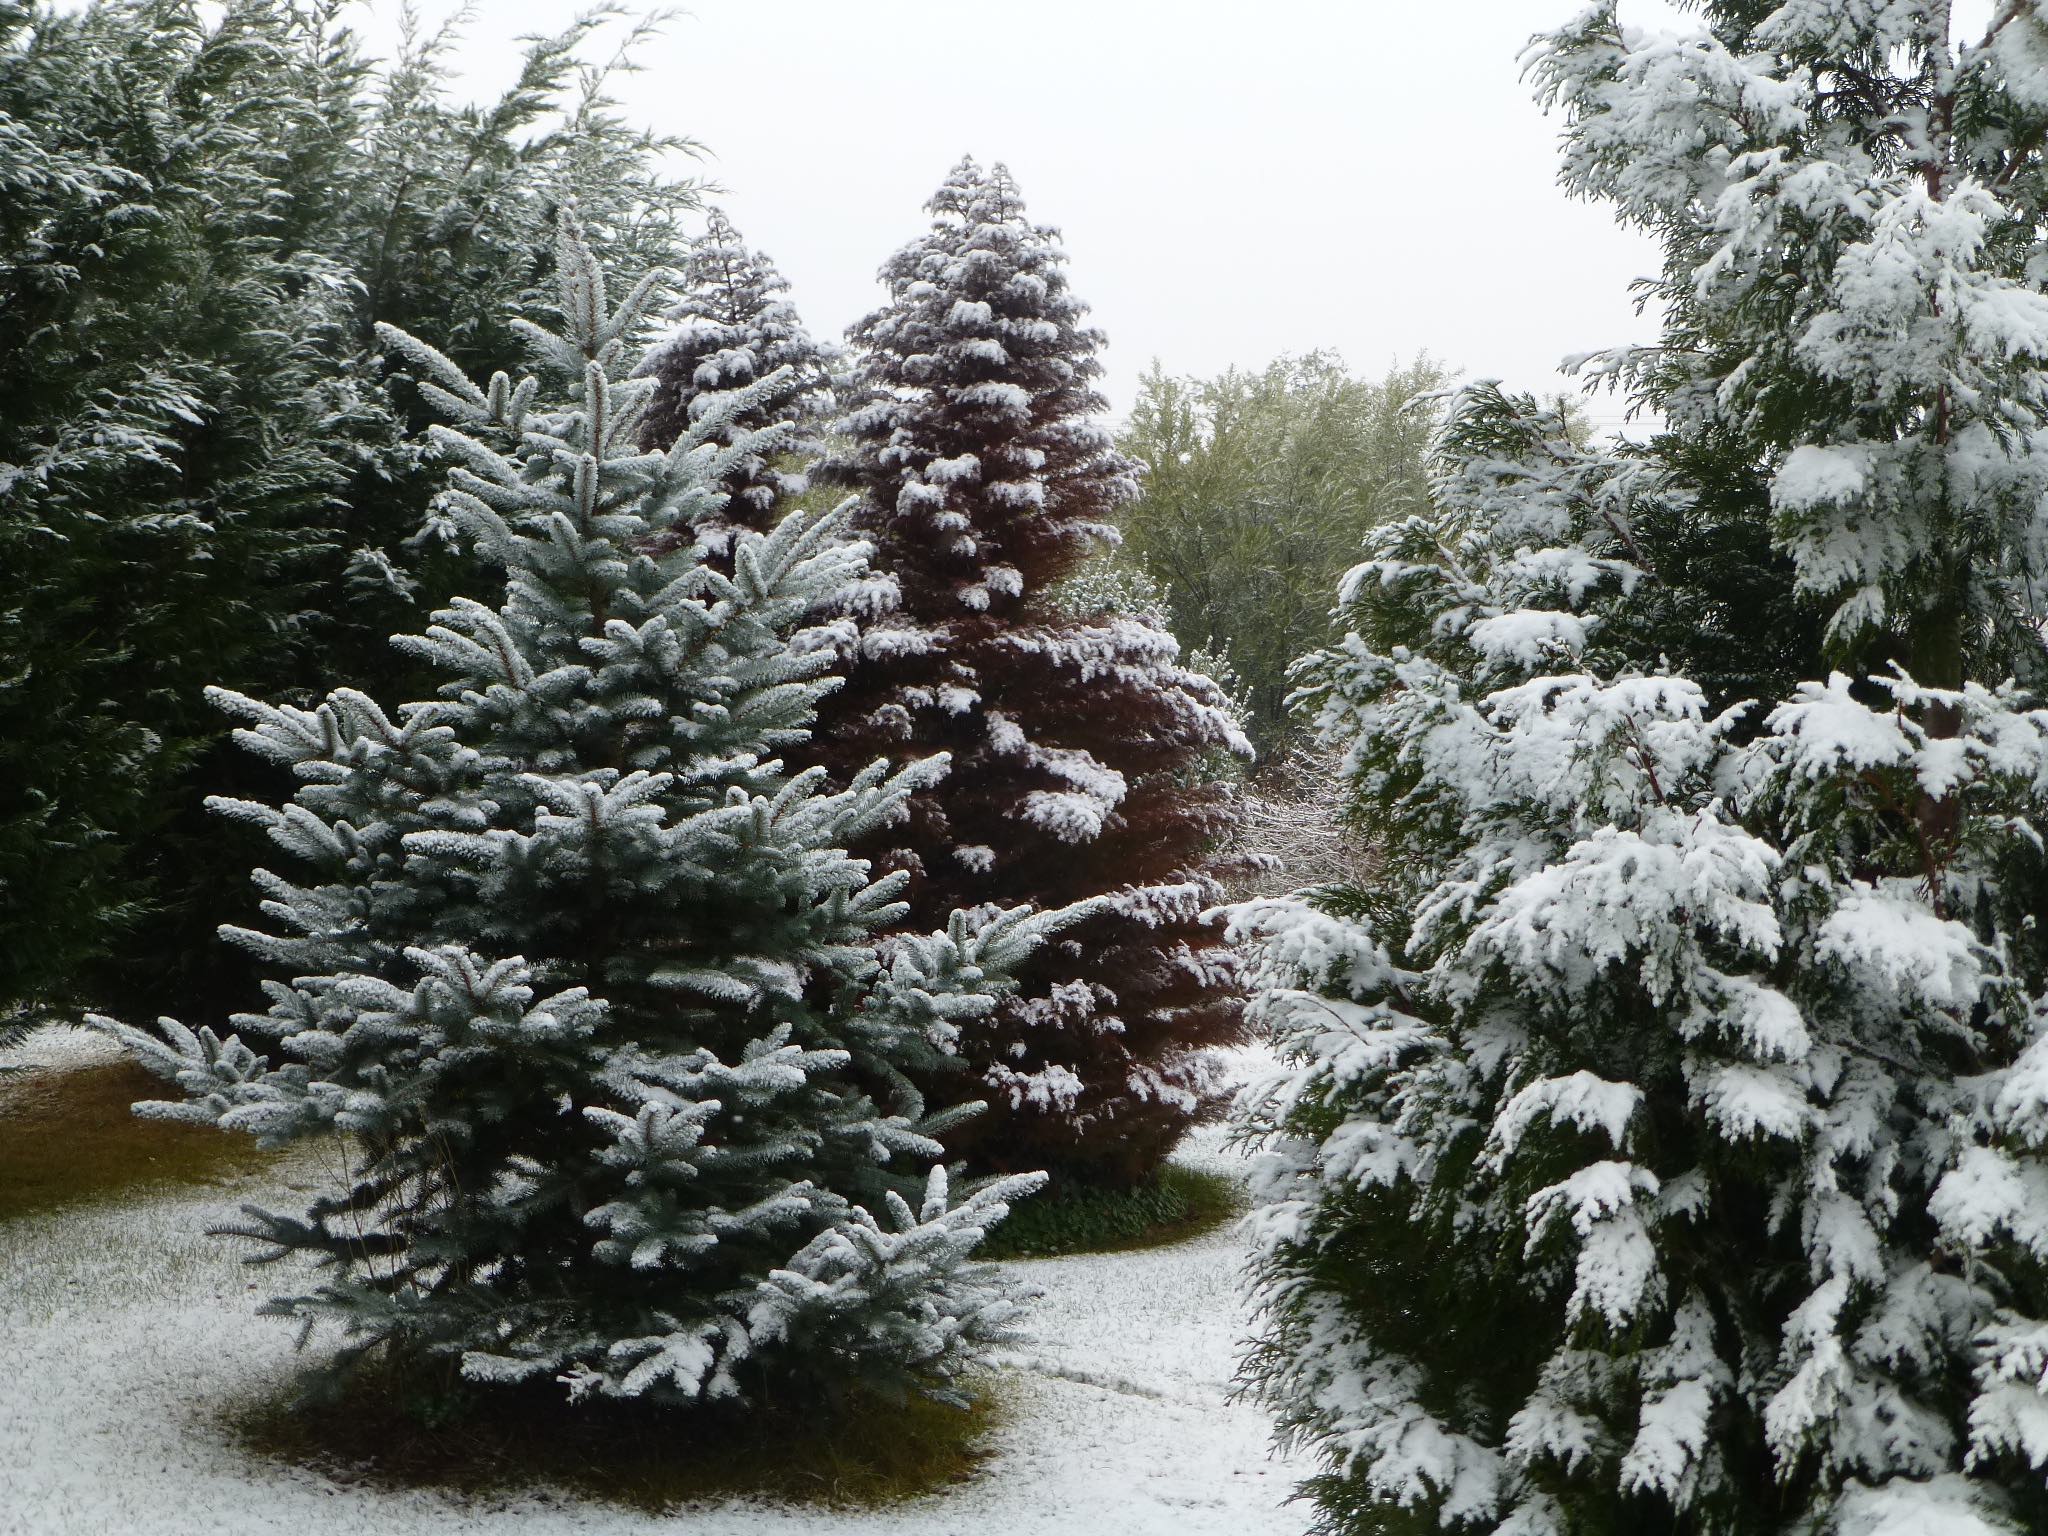 Snow on conifers